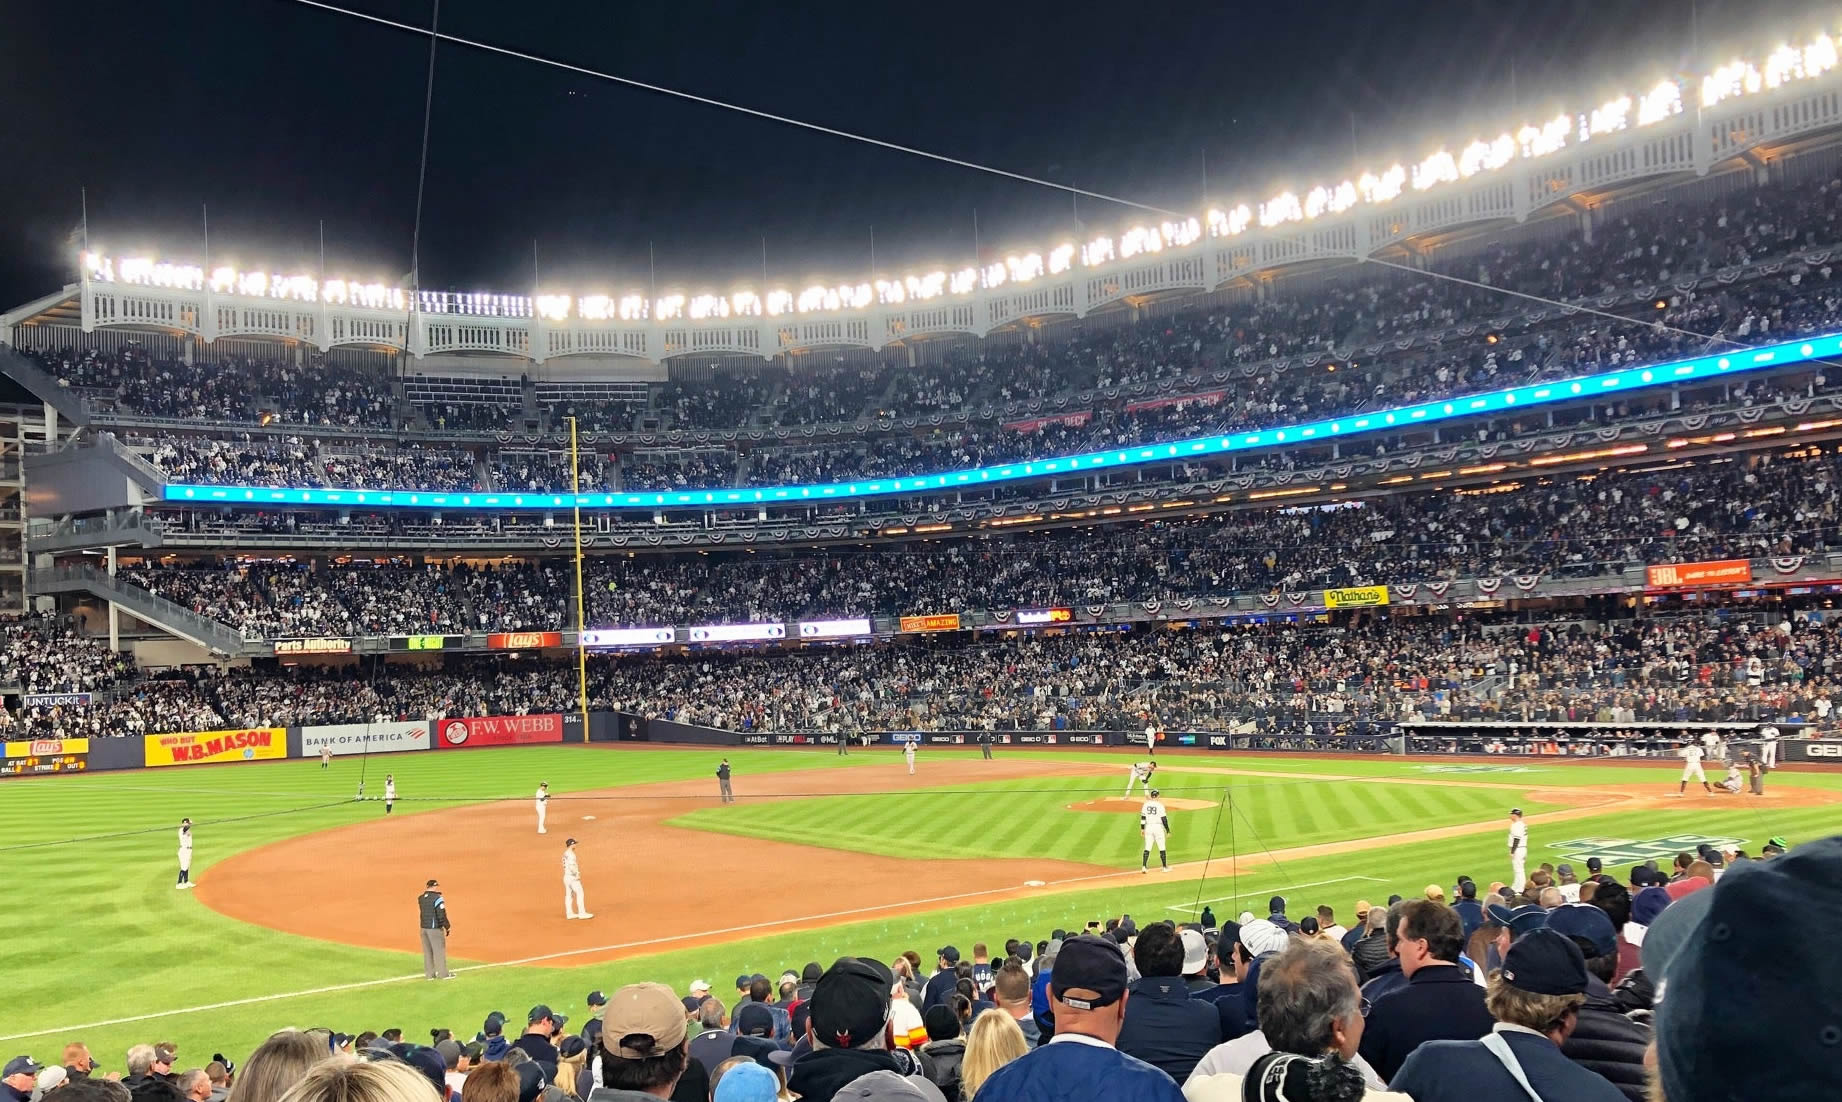 section 127b seat view  for baseball - yankee stadium